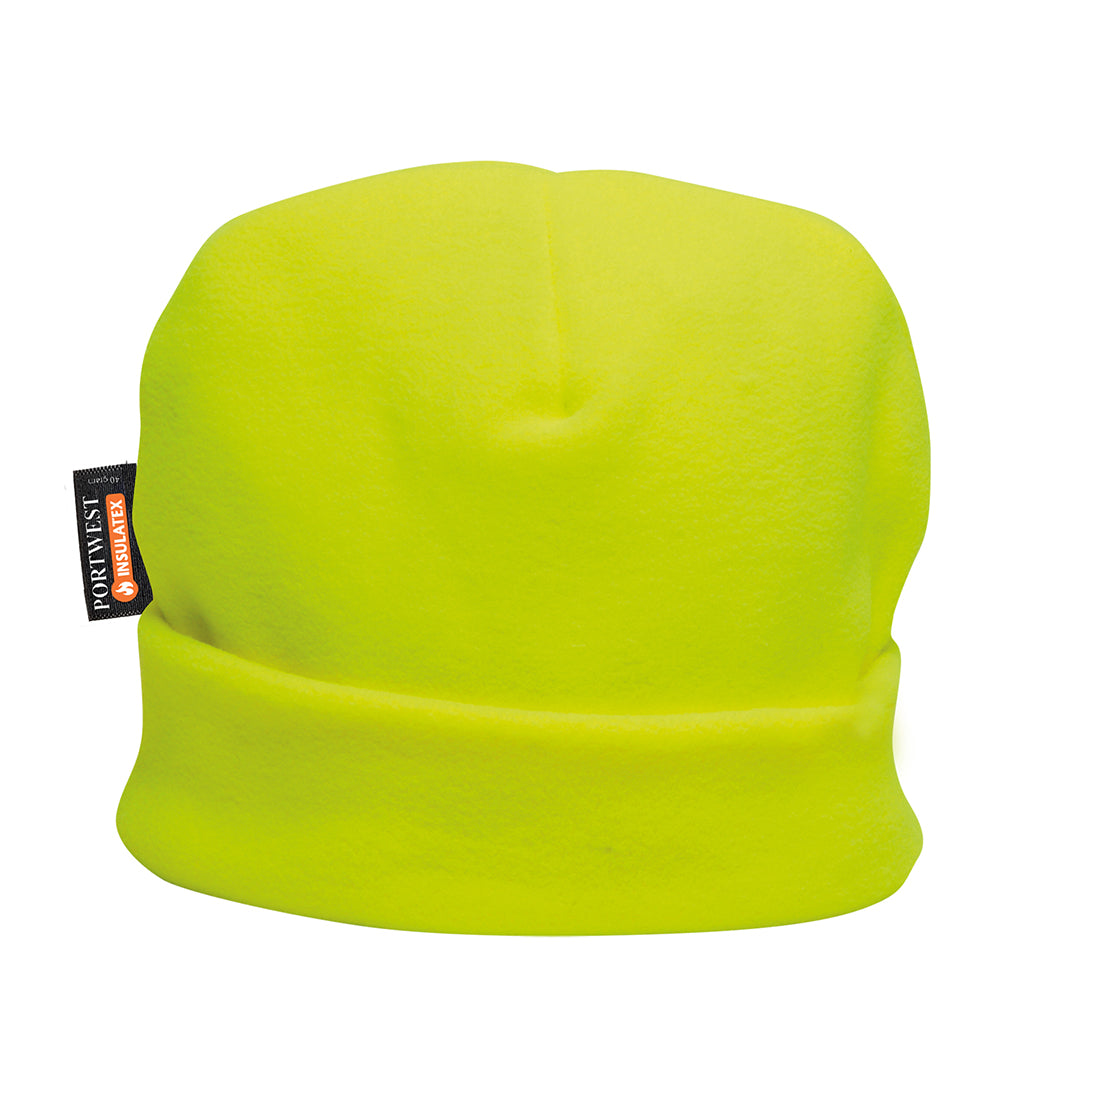 HA10 - Fleece Hat Insulatex Lined Yellow